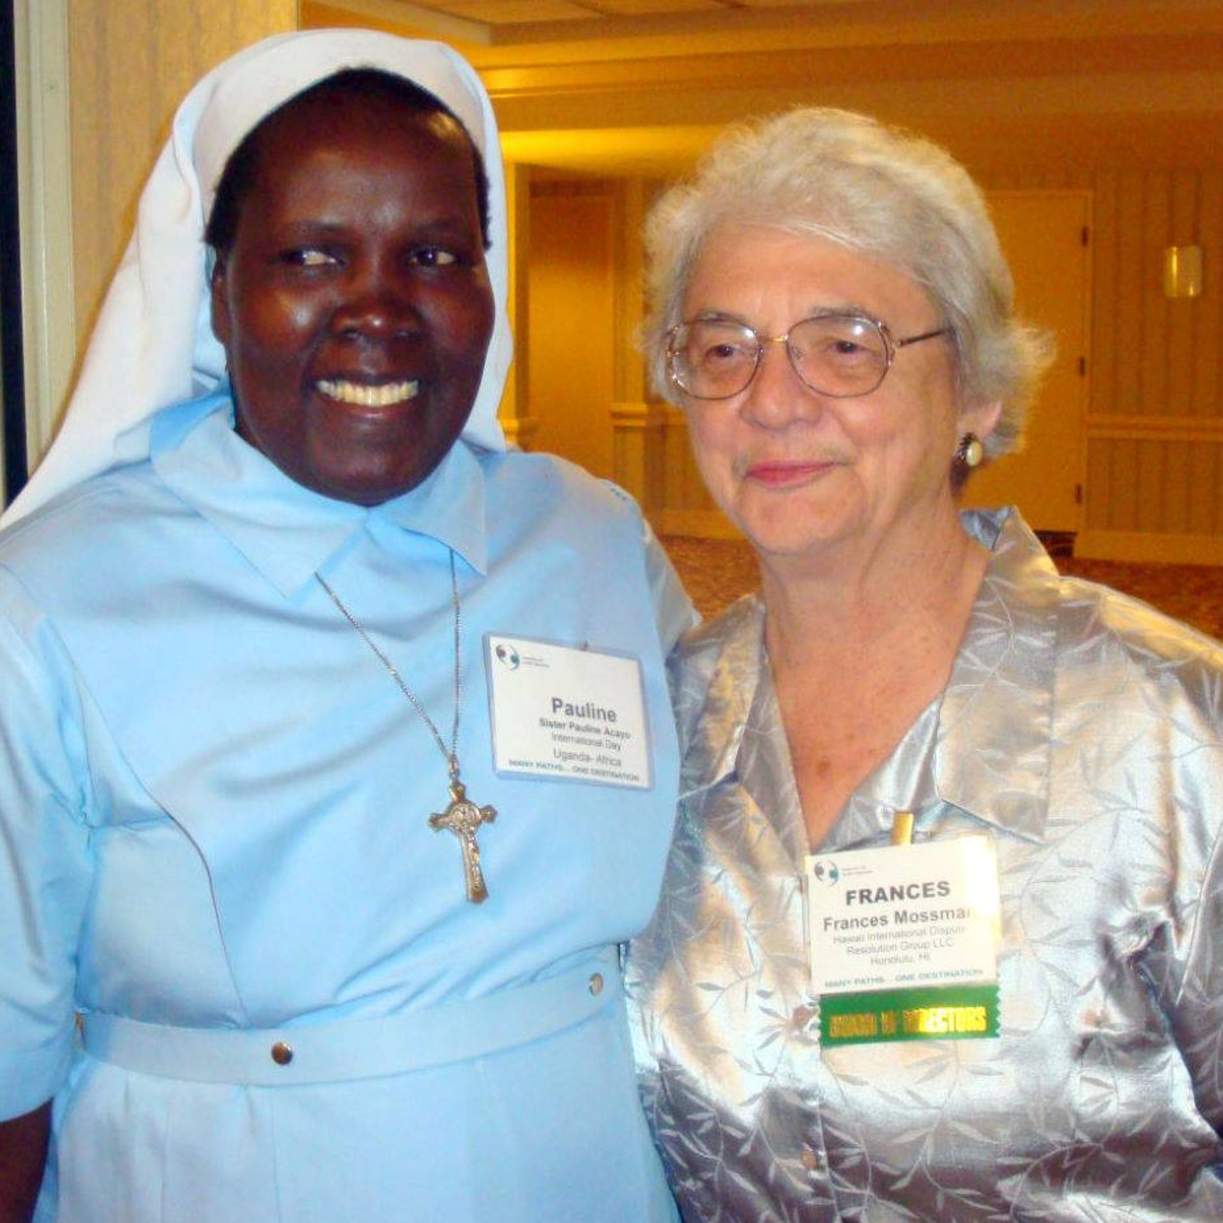 Sister Pauline Acayo and Frances Mossman